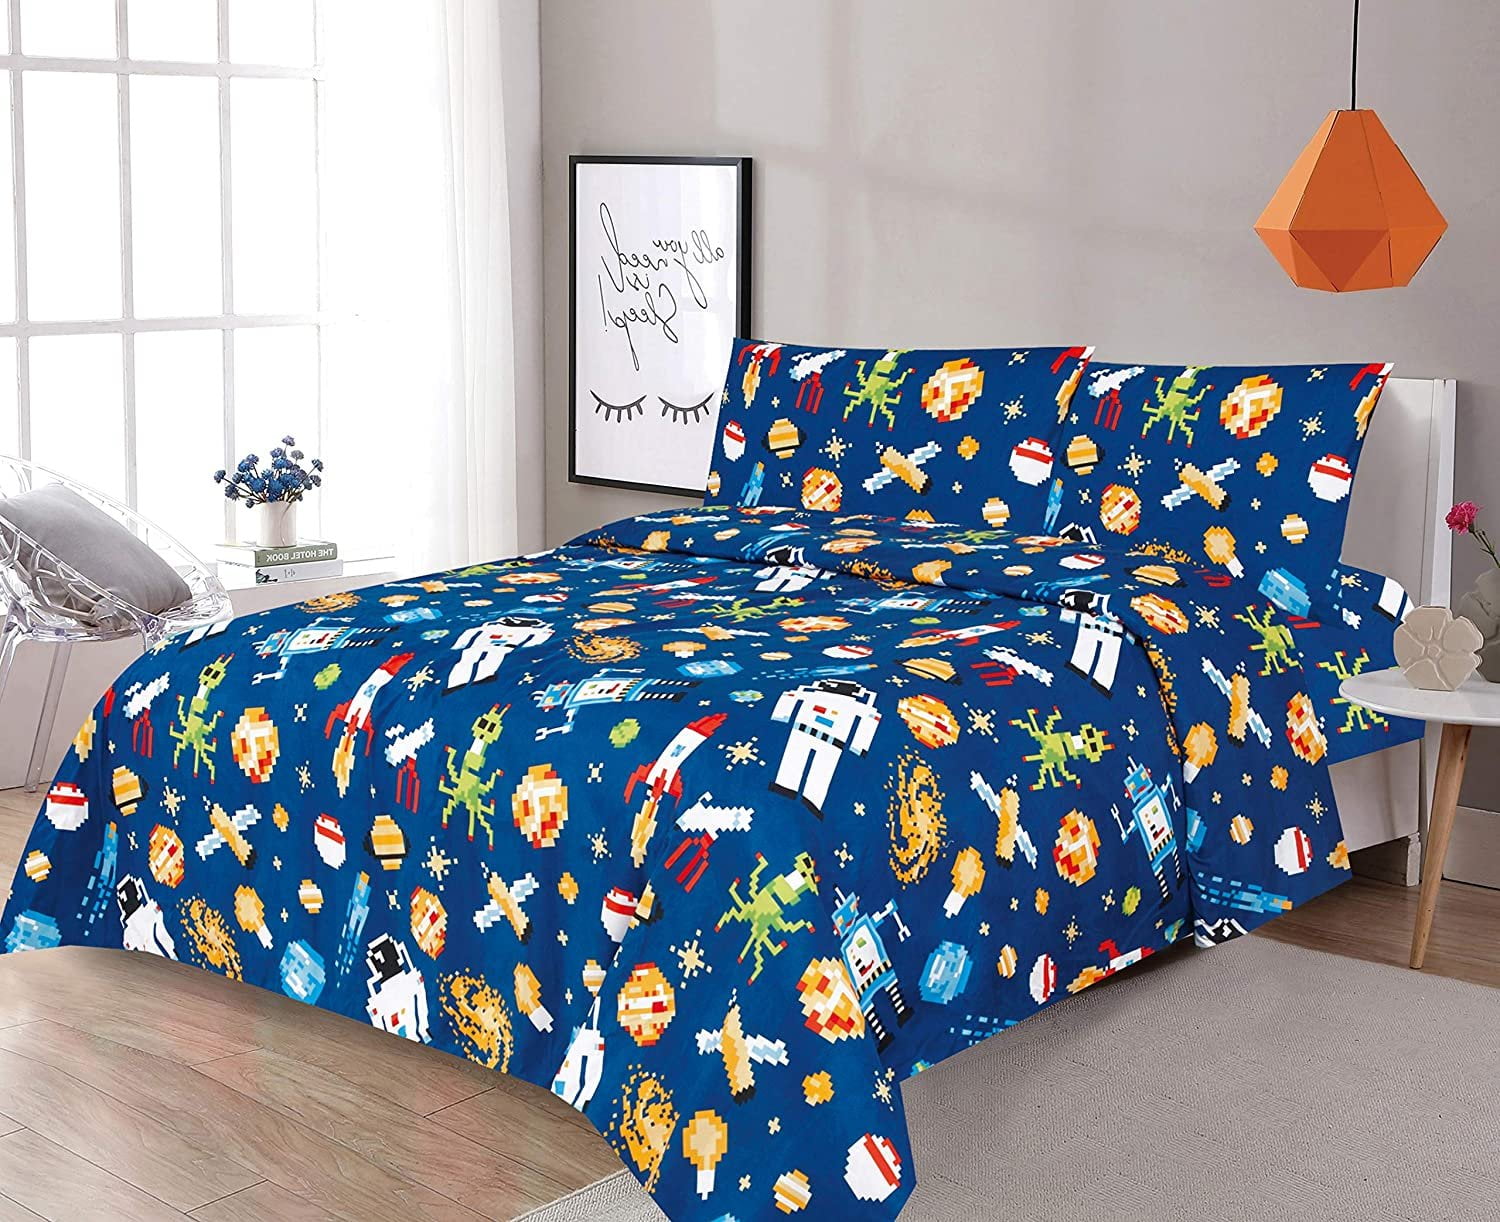 Fitted Sheet Flat Sheet Harry Potter 4 Pc Toddler Bed Set Pillow Comforter 